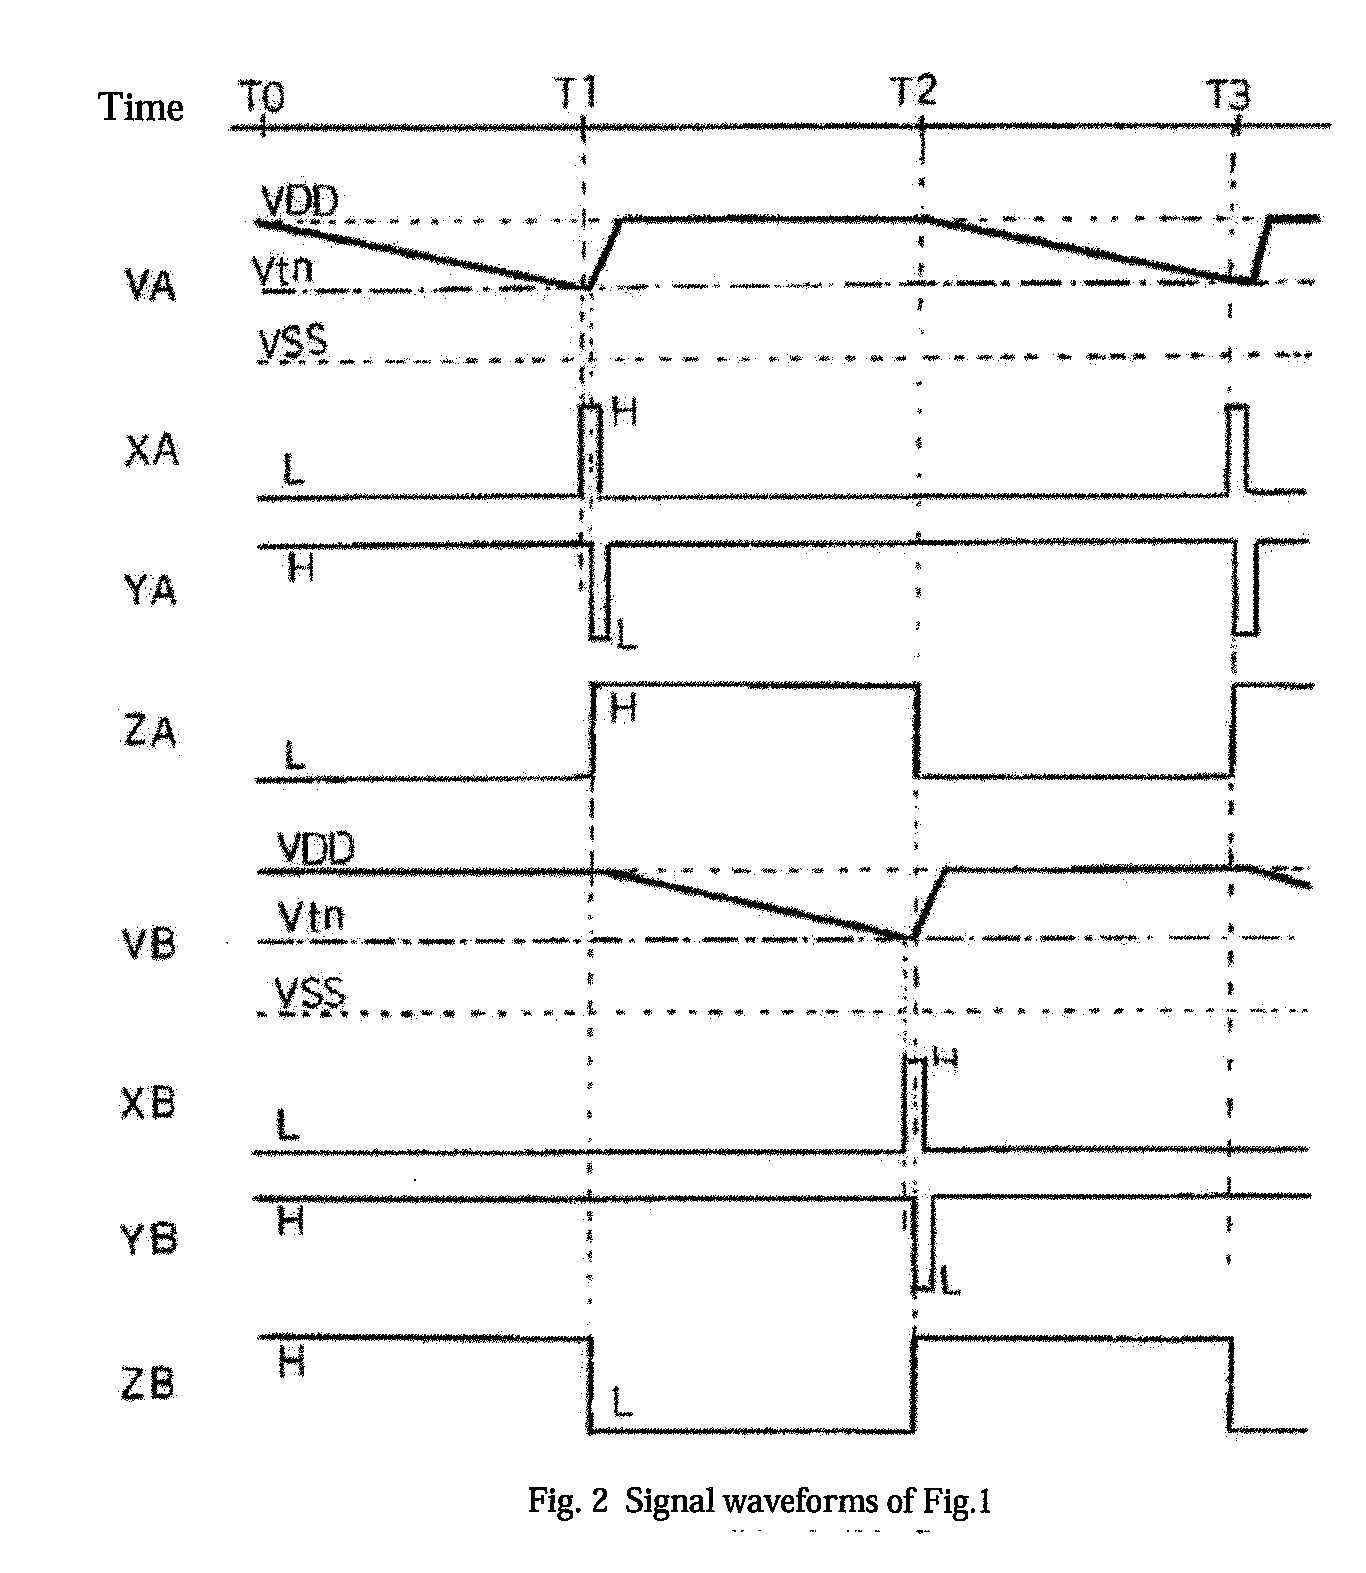 Oscillation Circuit